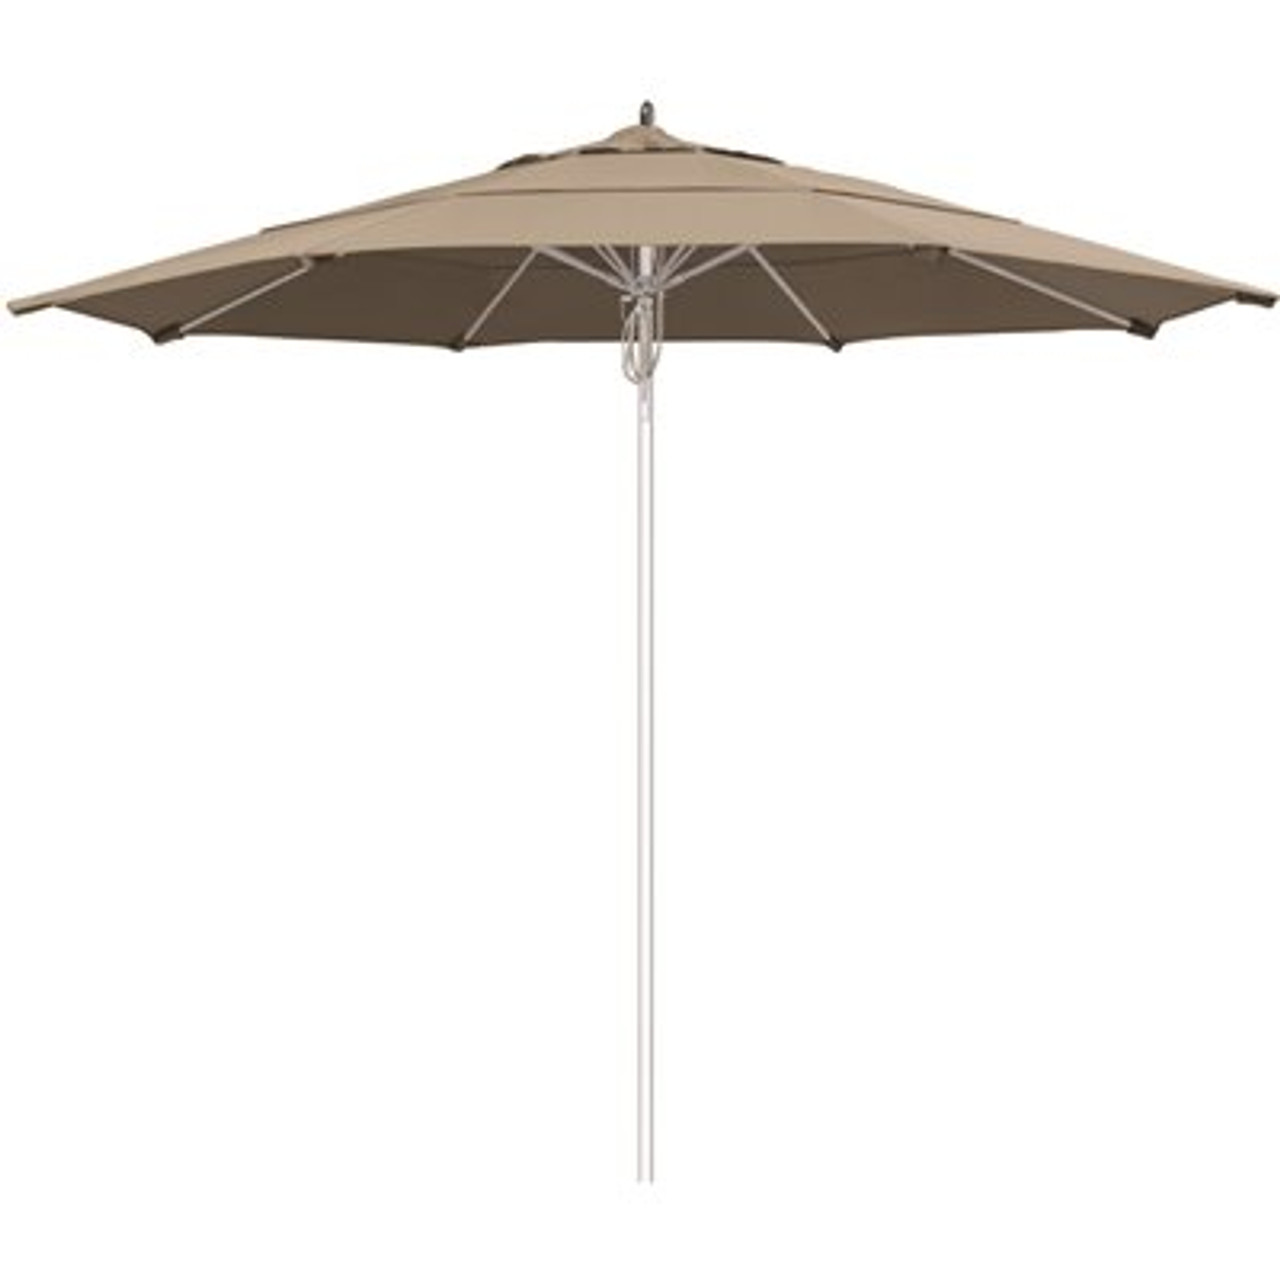 11 ft. Silver Aluminum Commercial Market Patio Umbrella Fiberglass Ribs and Pulley lift in Taupe Sunbrella